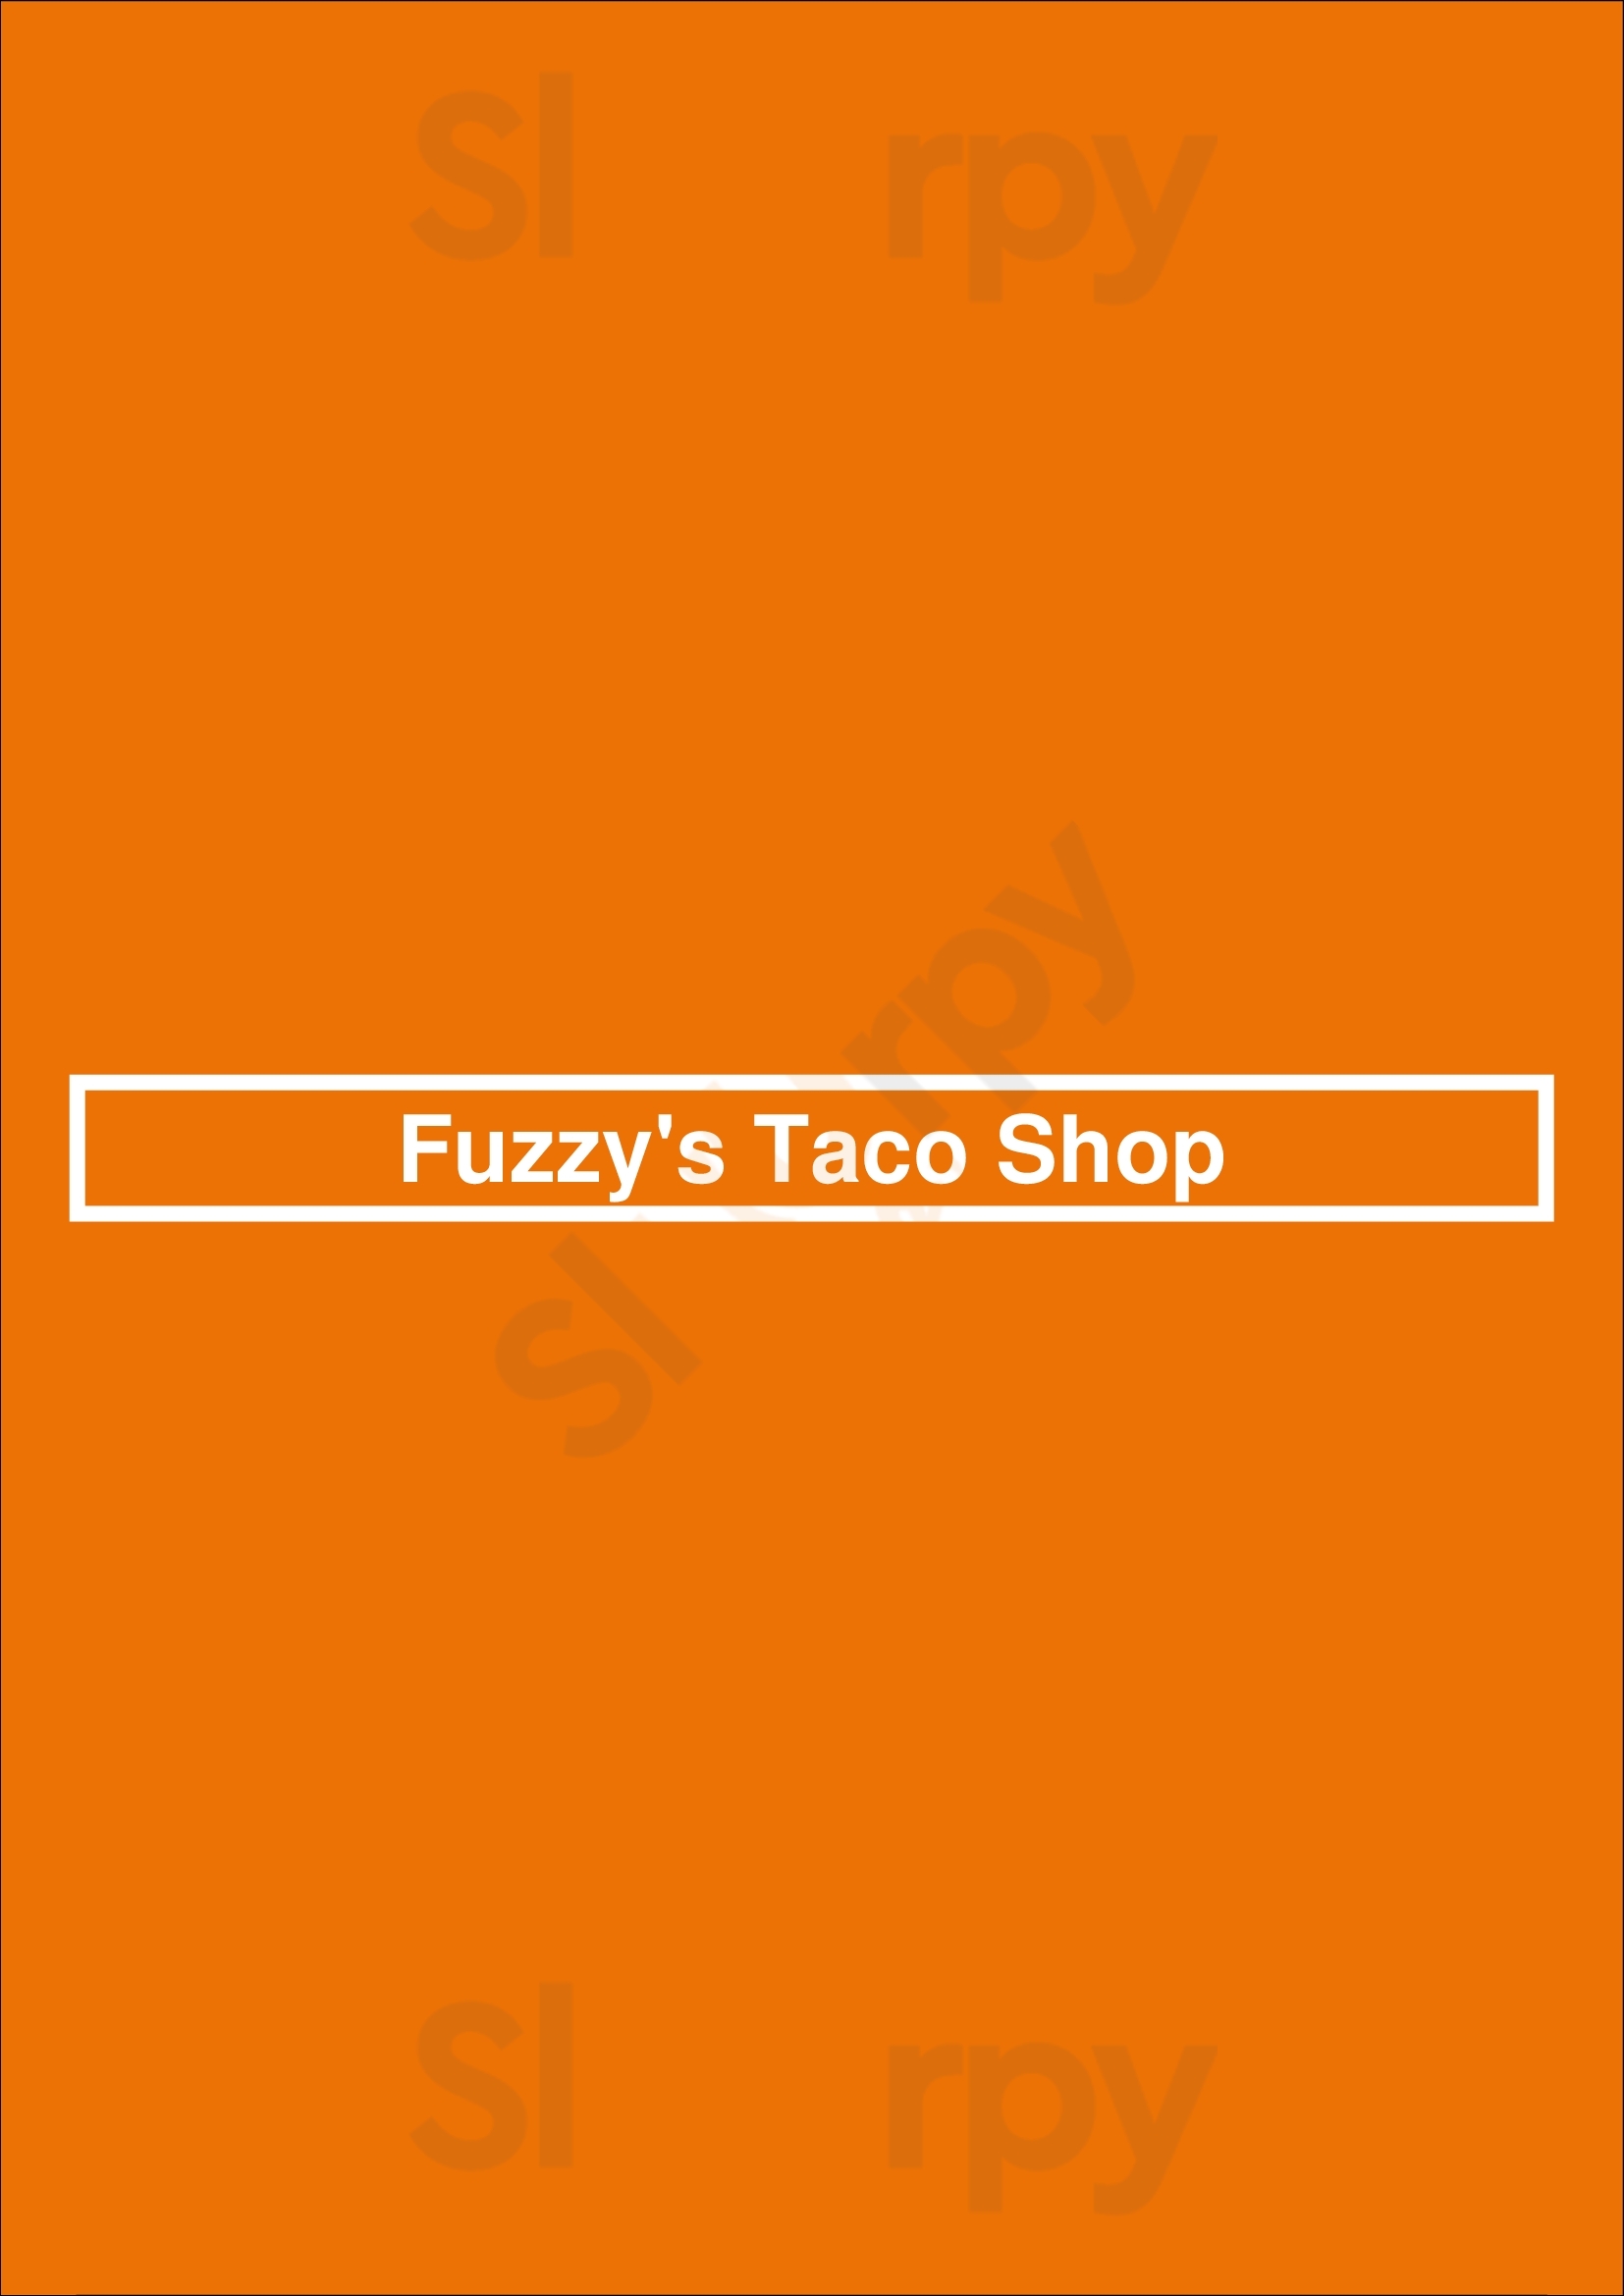 Fuzzy's Taco Shop Plano Menu - 1